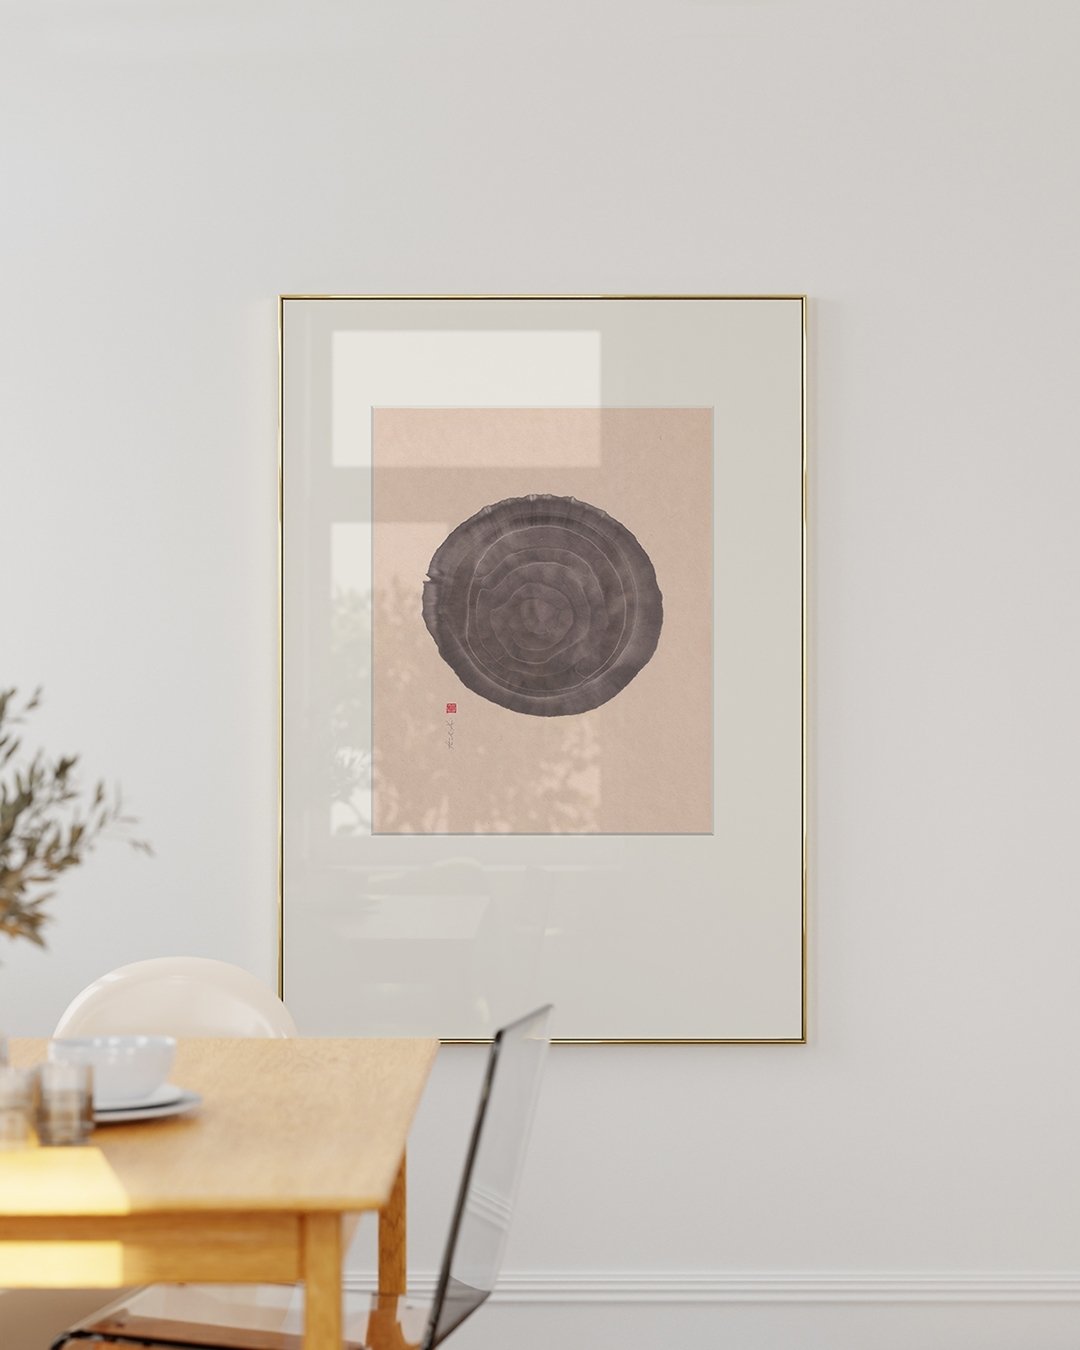 Zen meets Scandinavian minimalism : Sumi ink and earth pigments on Washi paper (Awagami Kitakata) &ndash; Ensō N&deg;51 &ndash; 40 x 50cm (without mount)

&ndash; 
#minimalart #inkpainting by #abstractartist #thothadan for your #minimal #gallerywall 